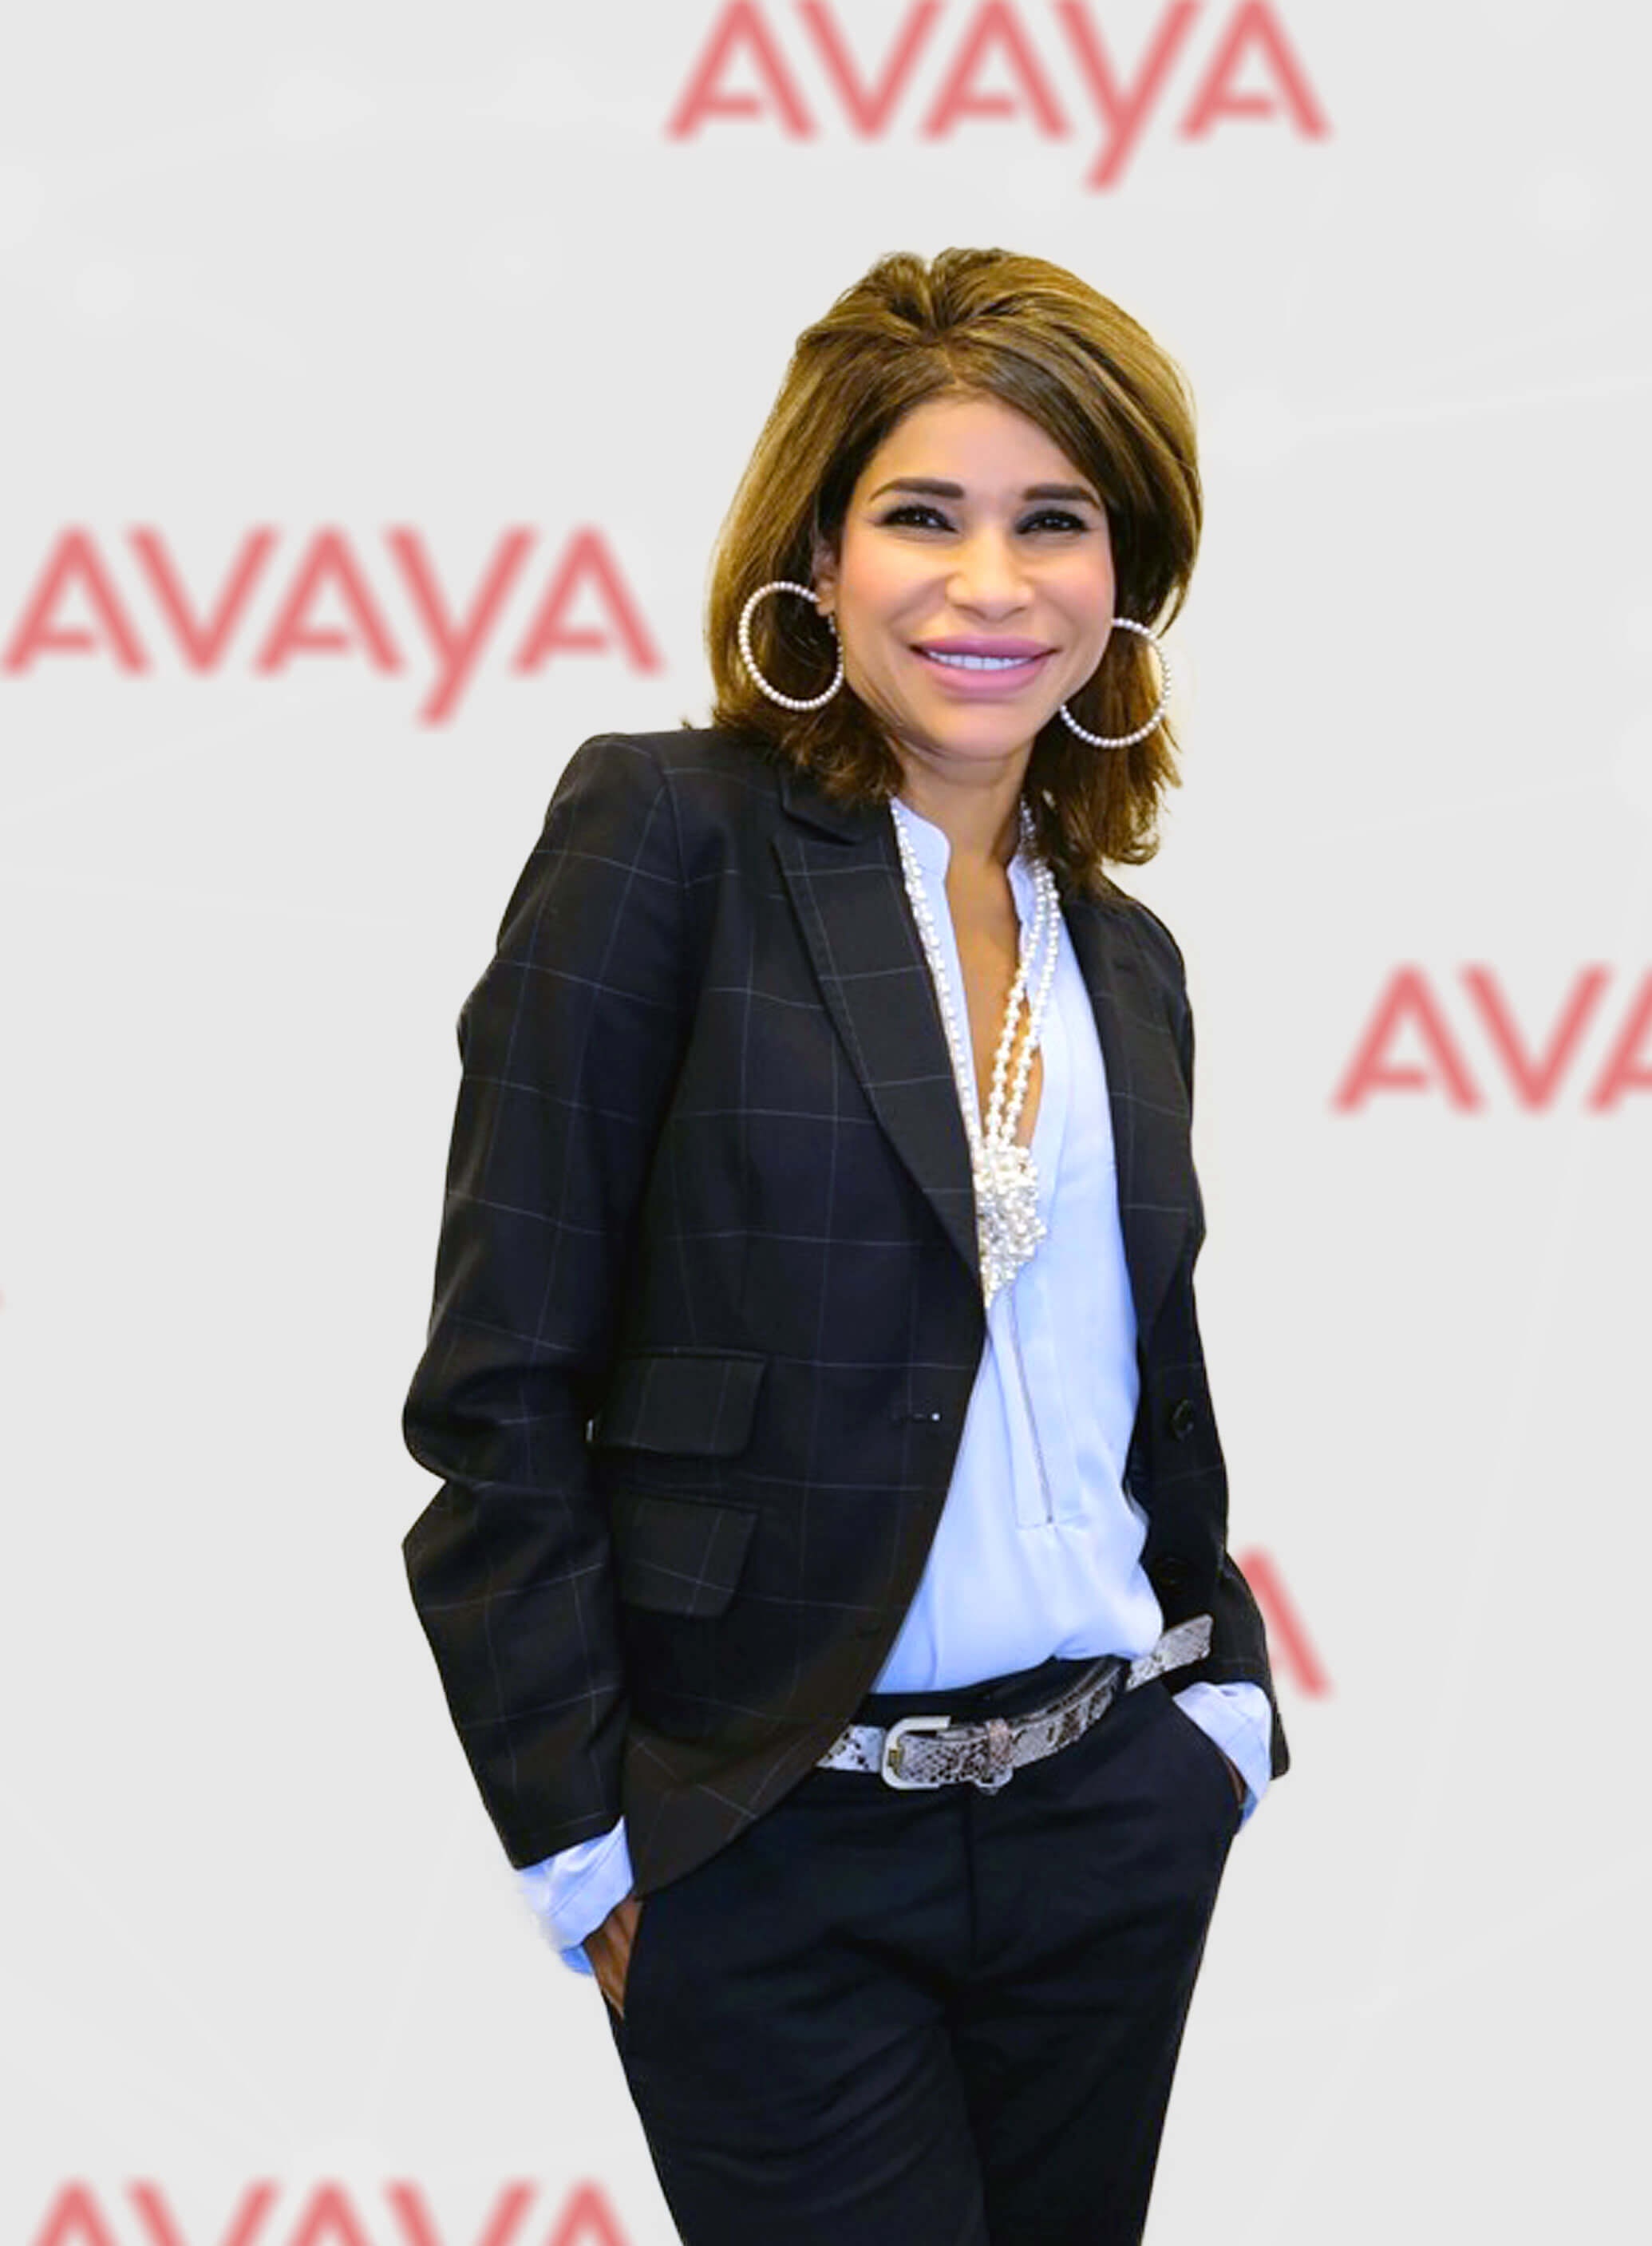 Avaya International's senior director of strategic alliances, Tanya Lobo